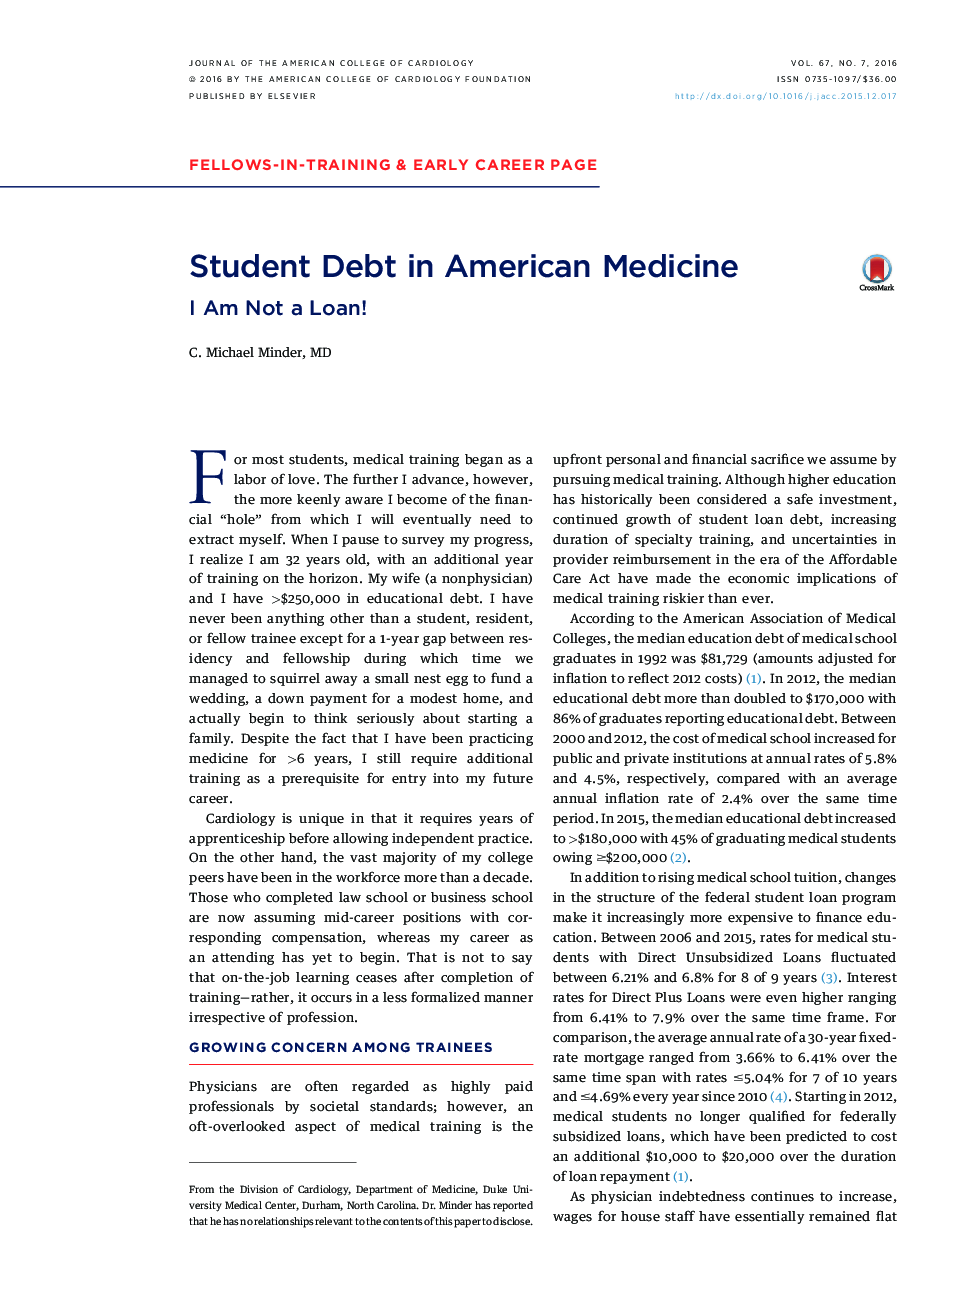 Student Debt in American Medicine